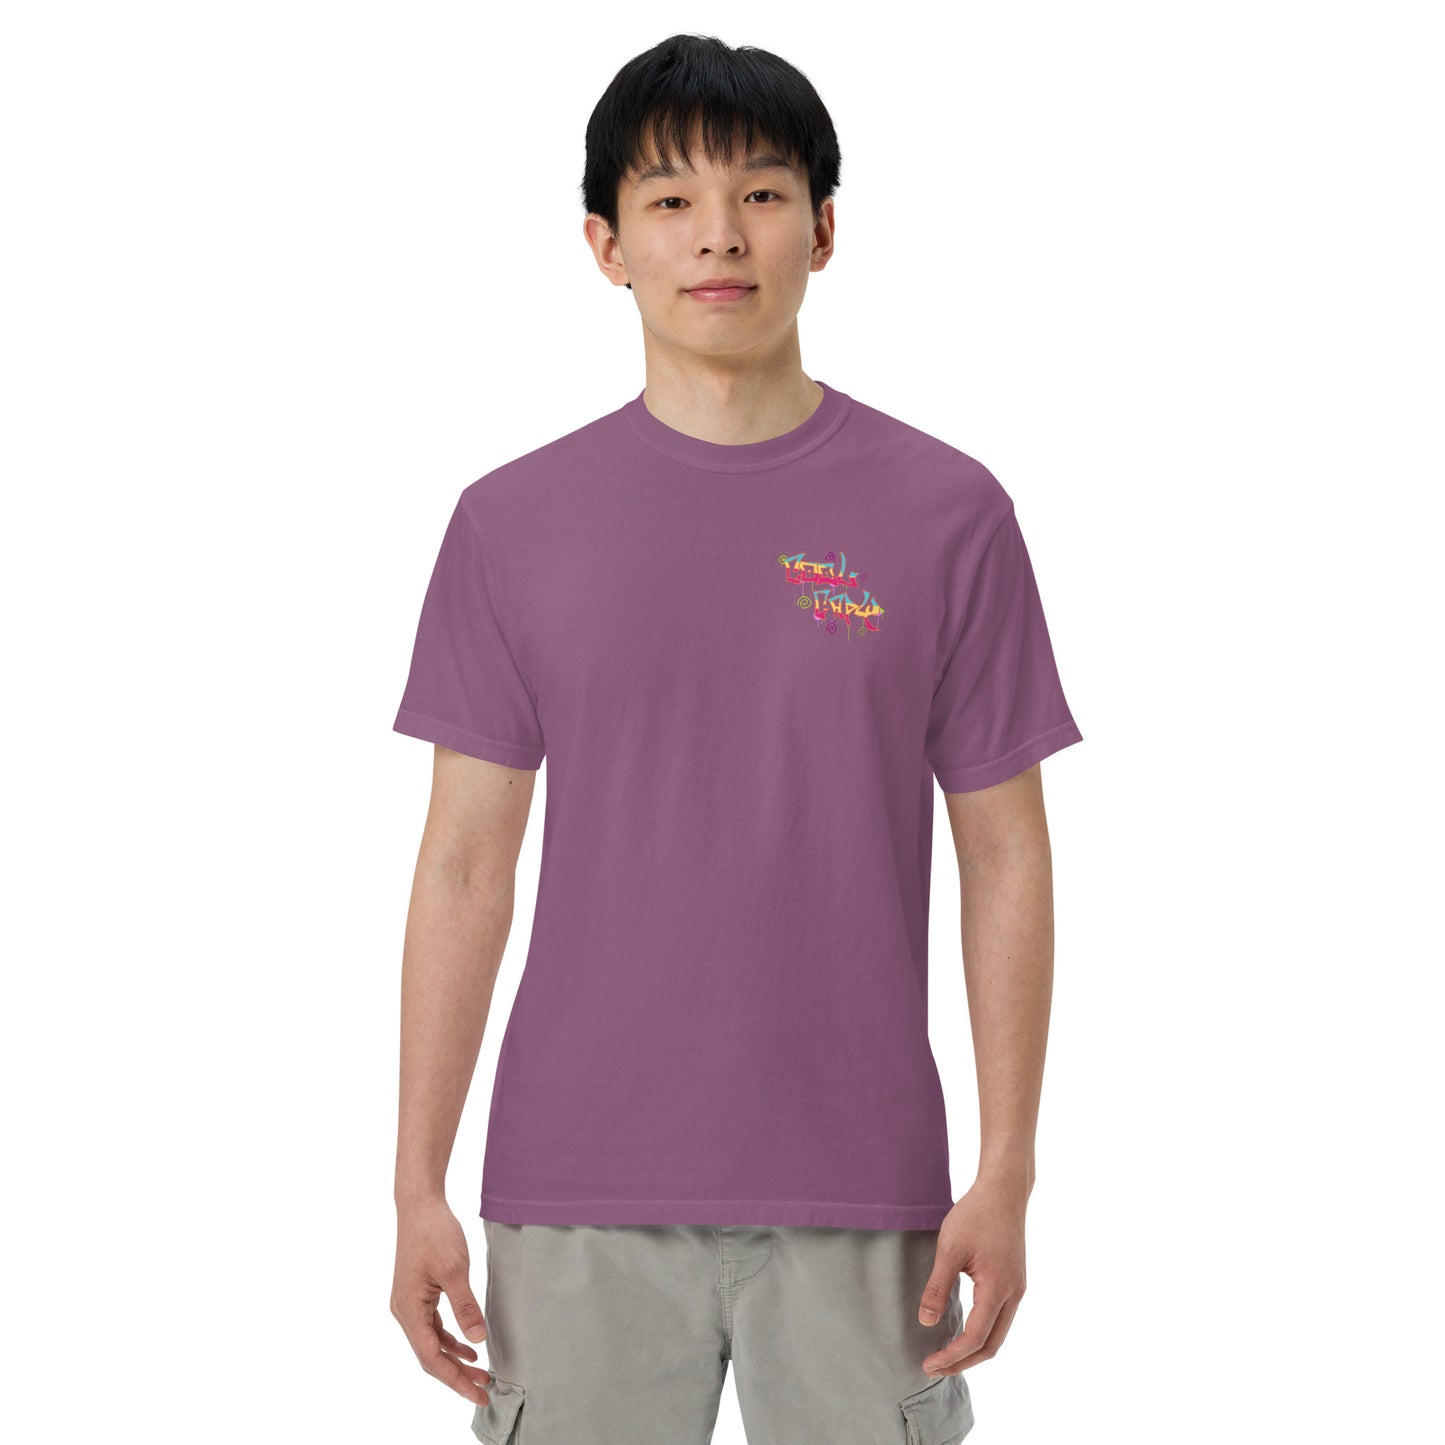 Cool Capy Graffiti Men’s garment-dyed heavyweight t-shirt